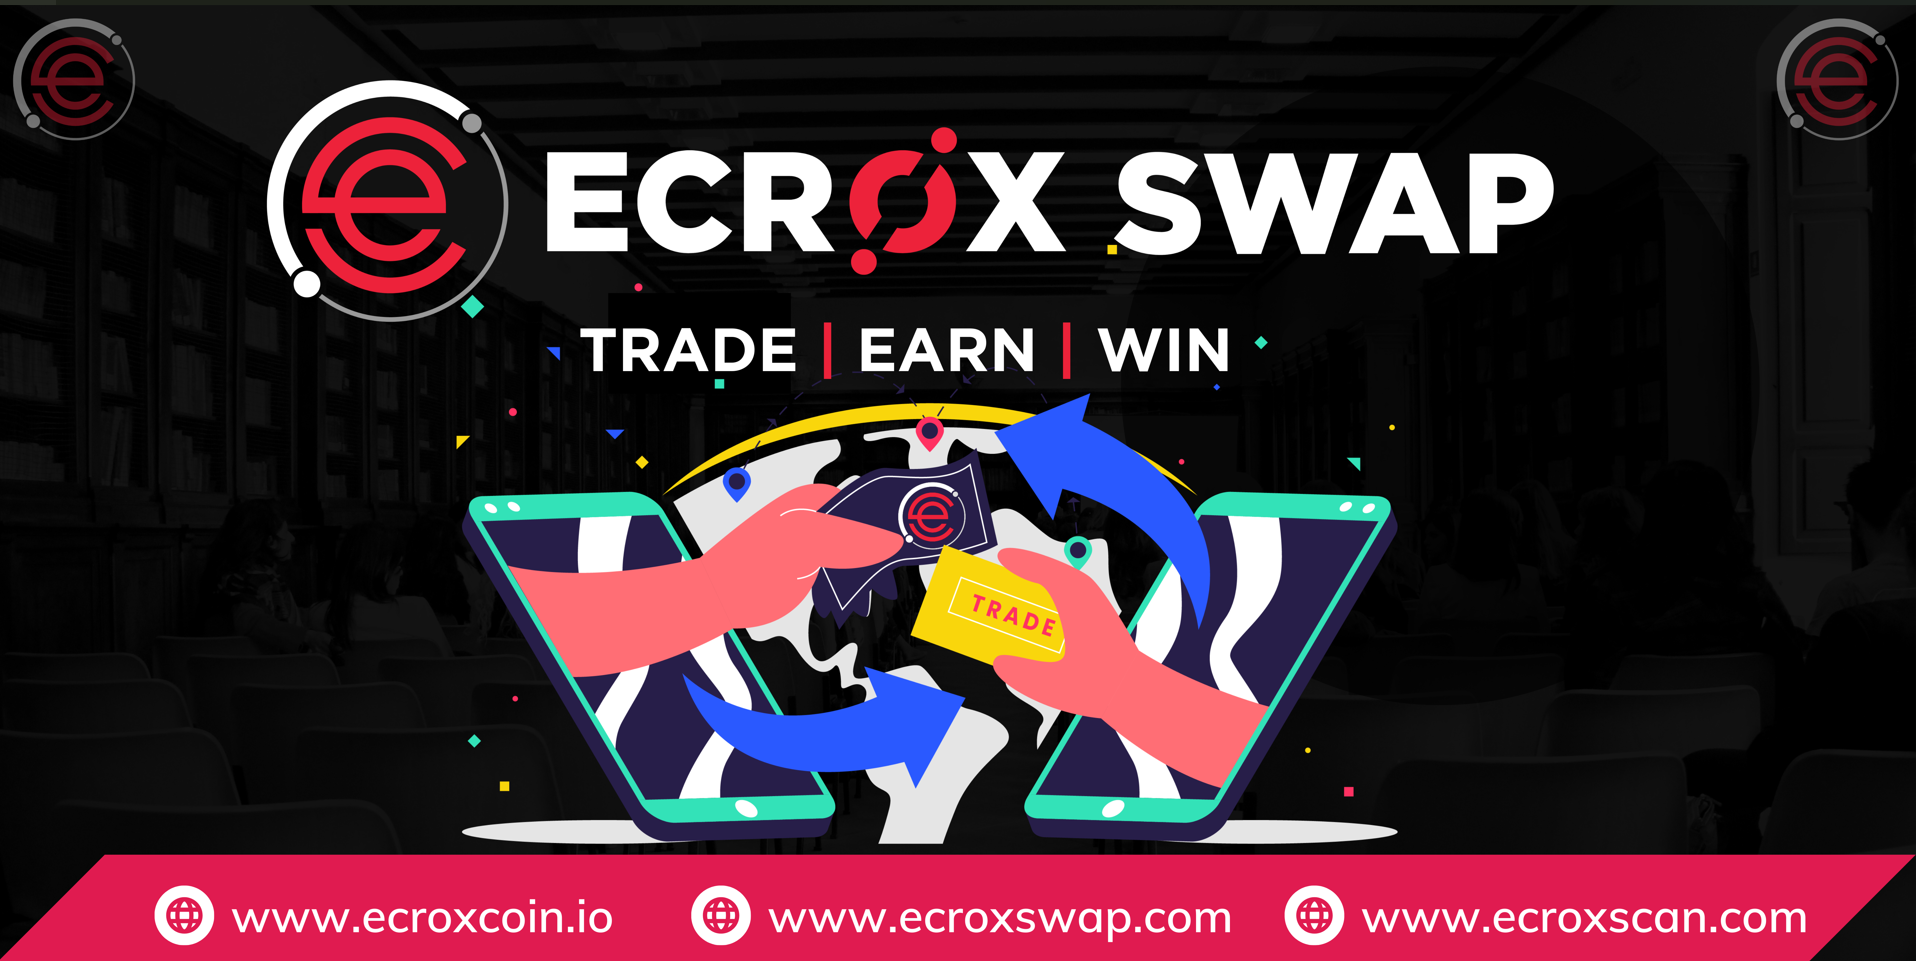 Ecrox Swap: The Vibrant Swap of the Ecrox Chain